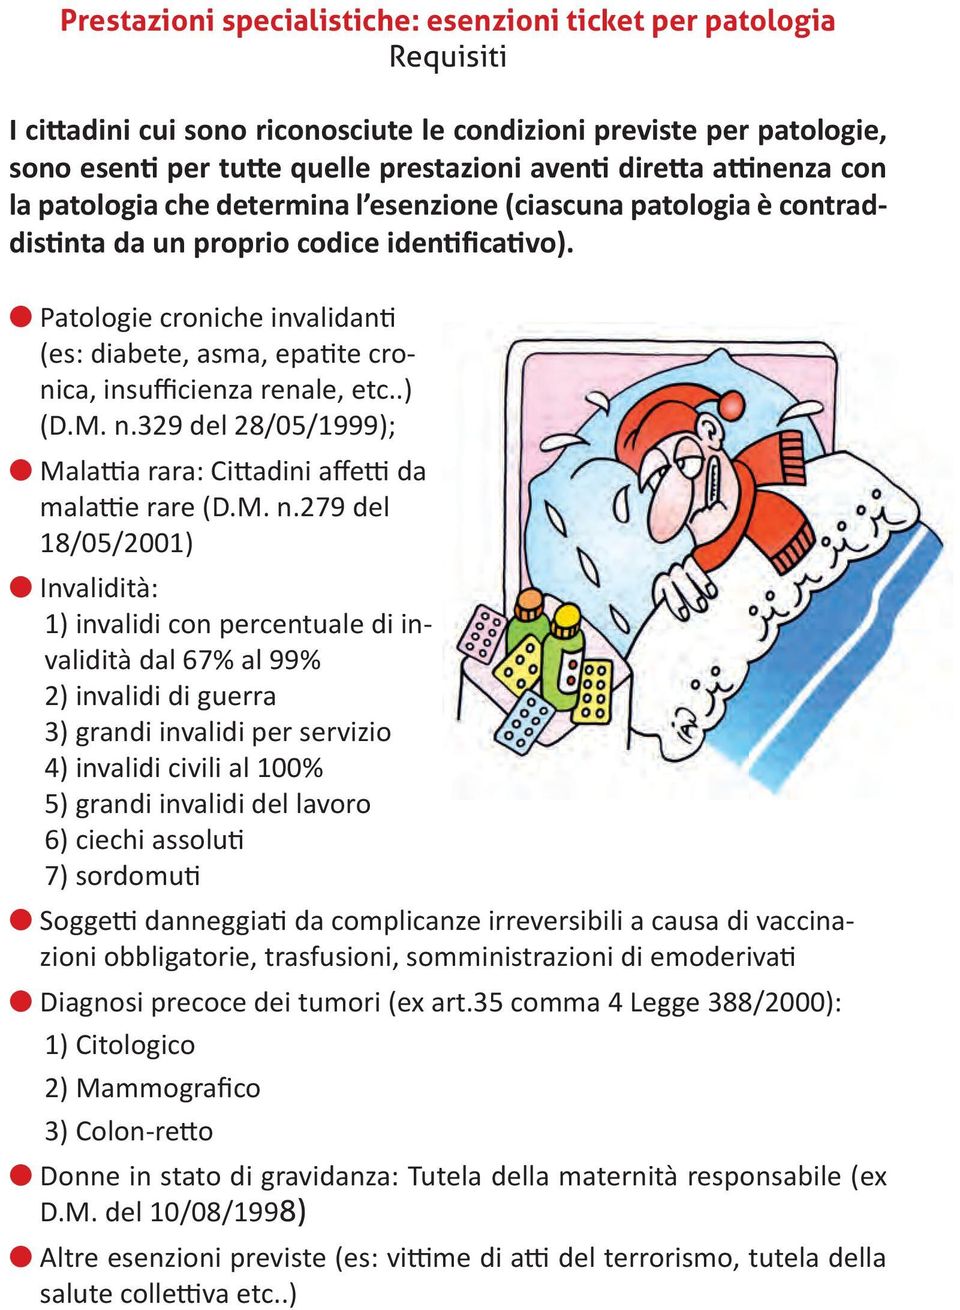 Patologie croniche invalidanti (es: diabete, asma, epatite cronica, insufficienza renale, etc..) (D.M. n.